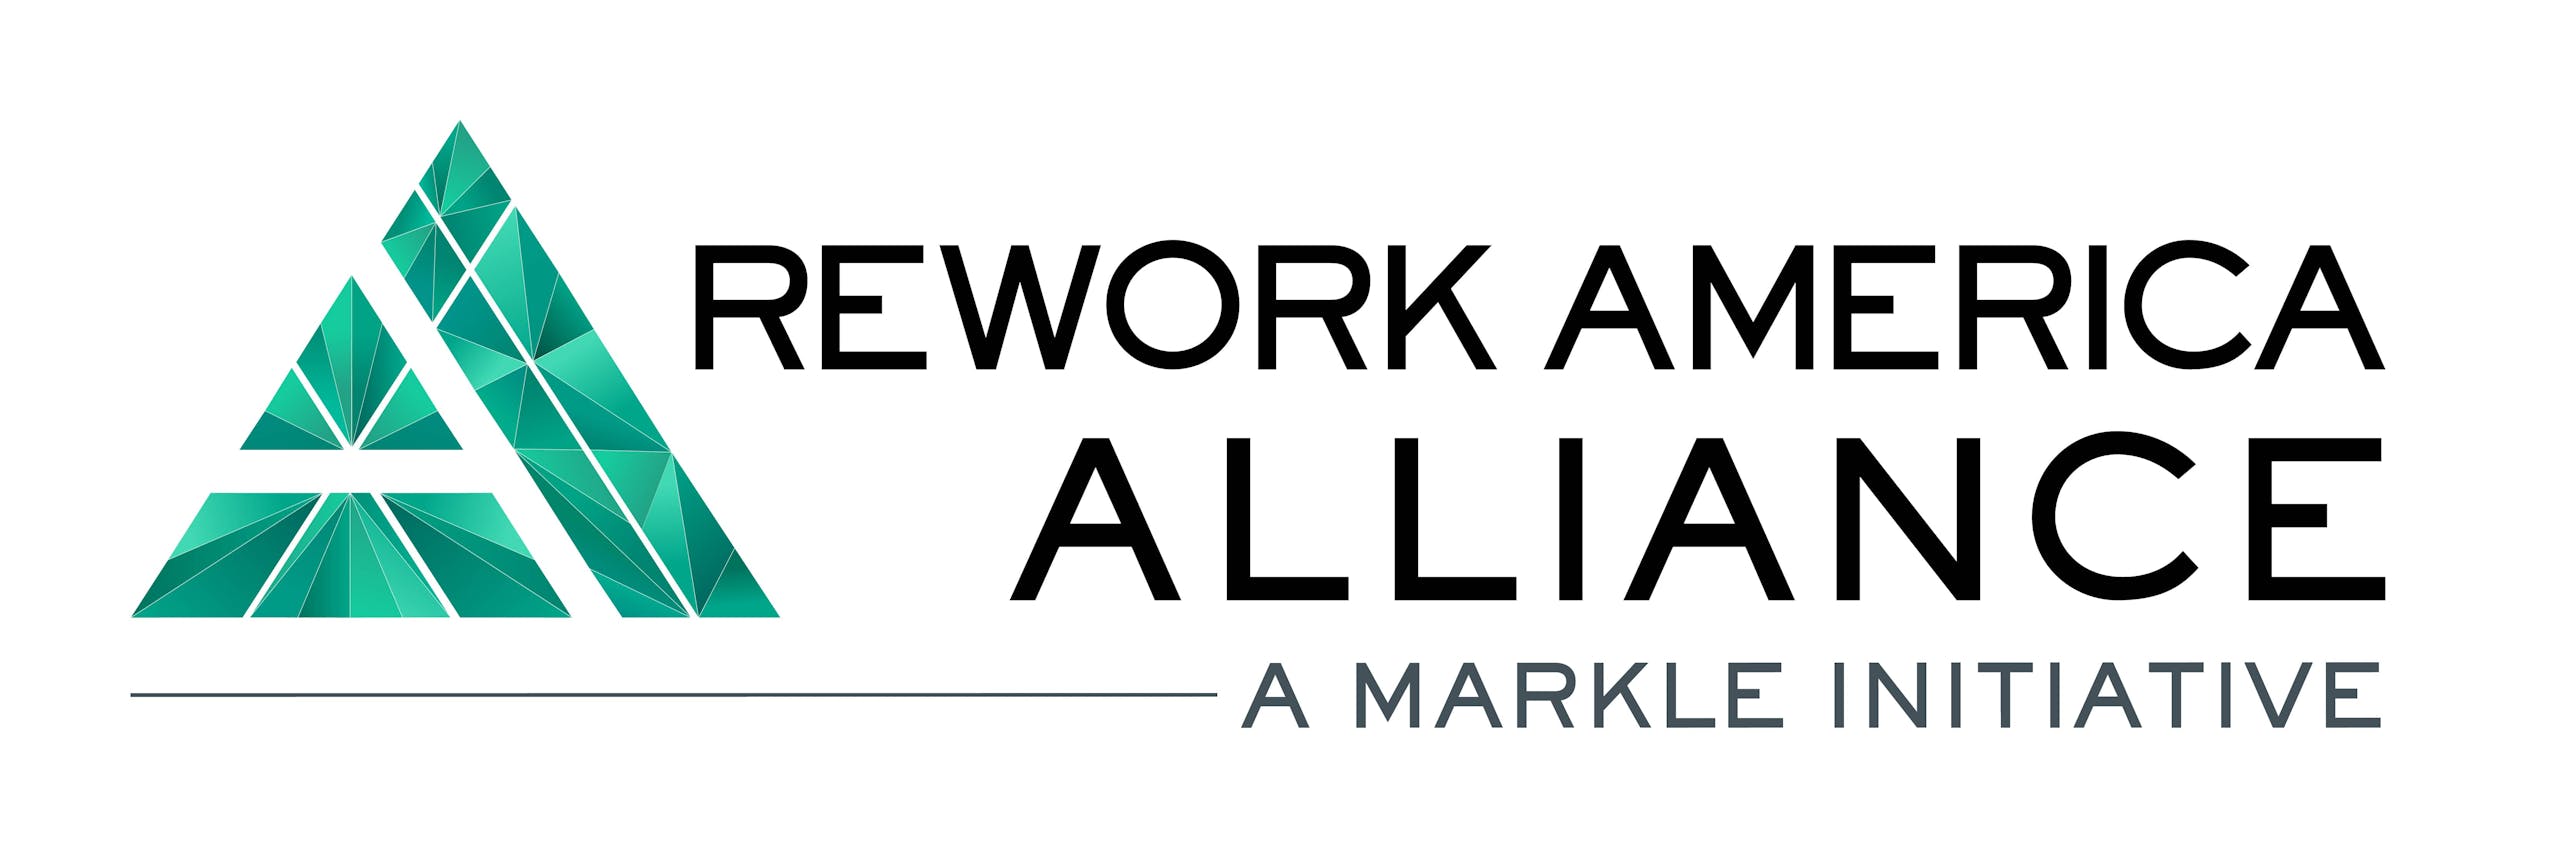 rework america alliance logo